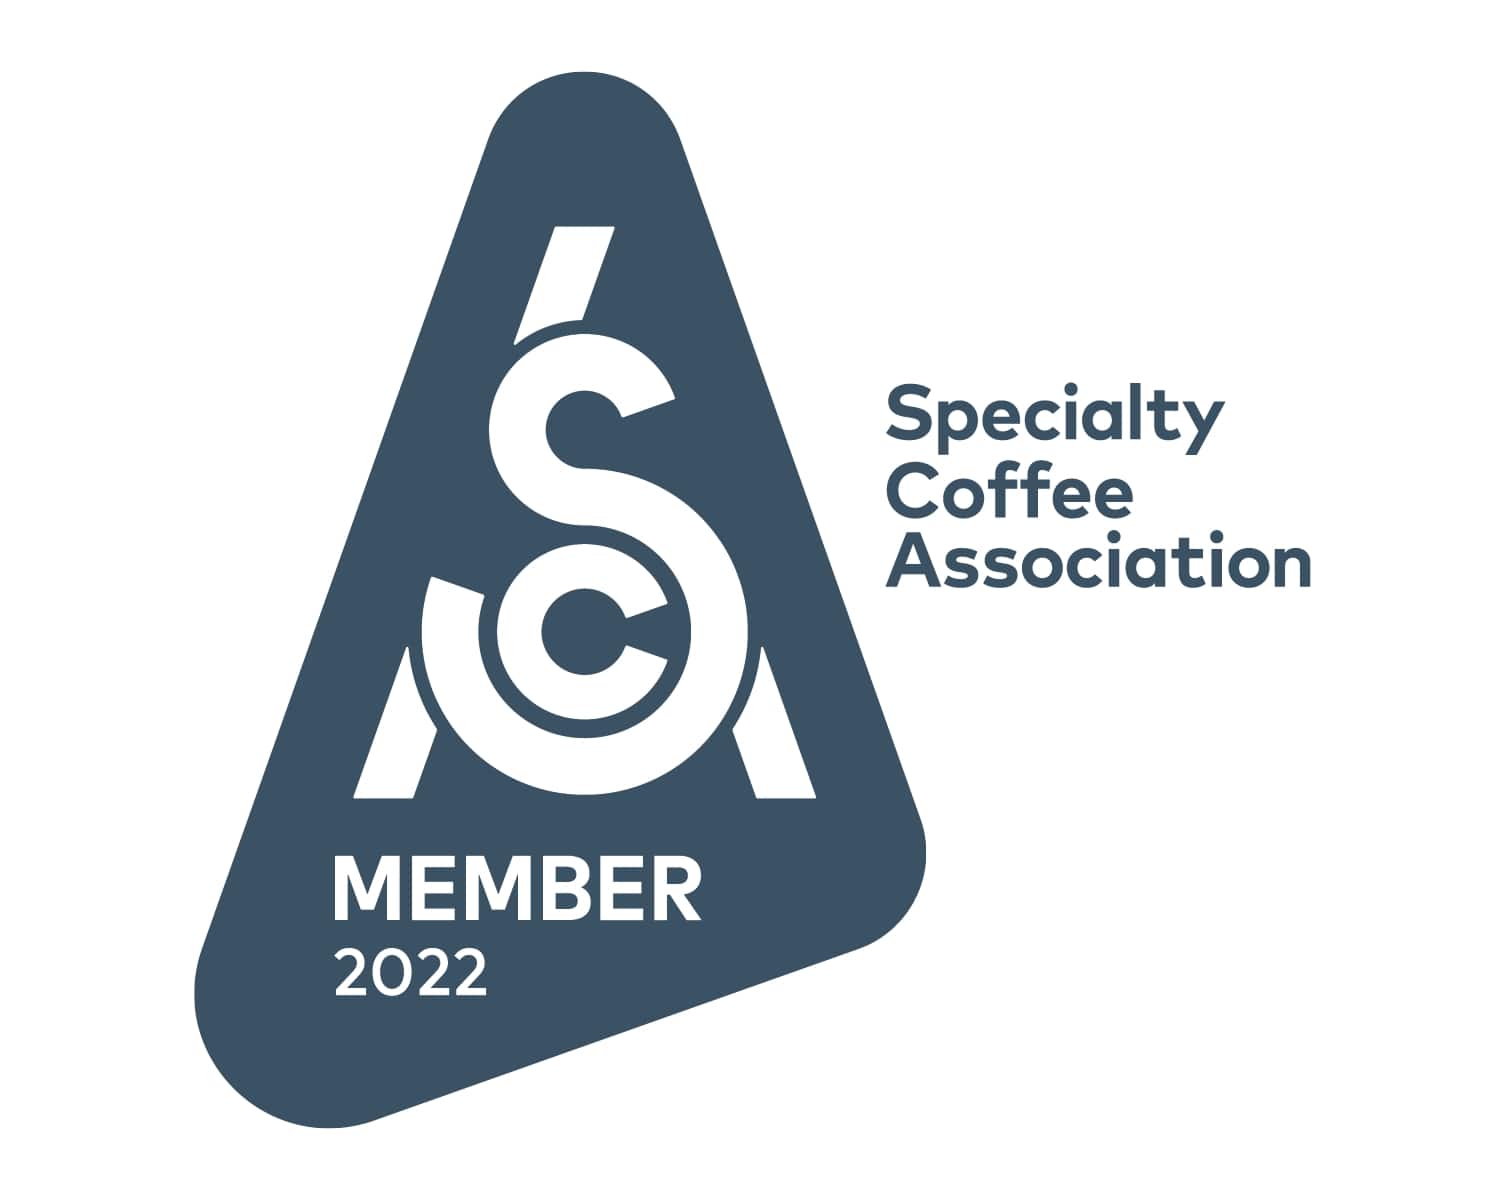 Specialty Coffee Association Member 2022